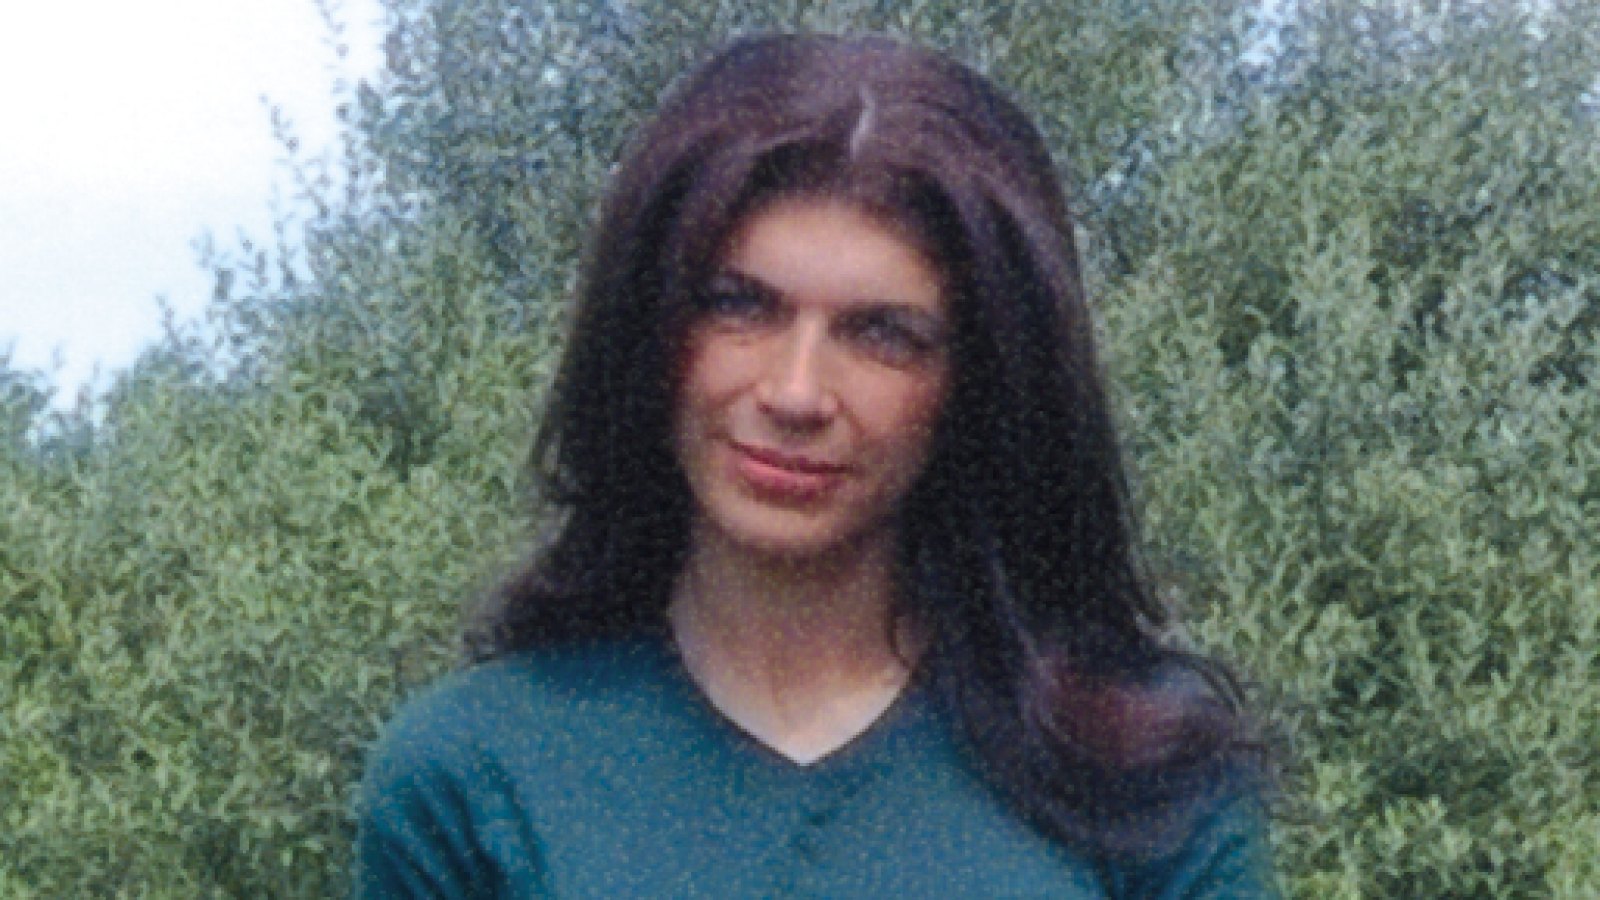 Teresa Giudice